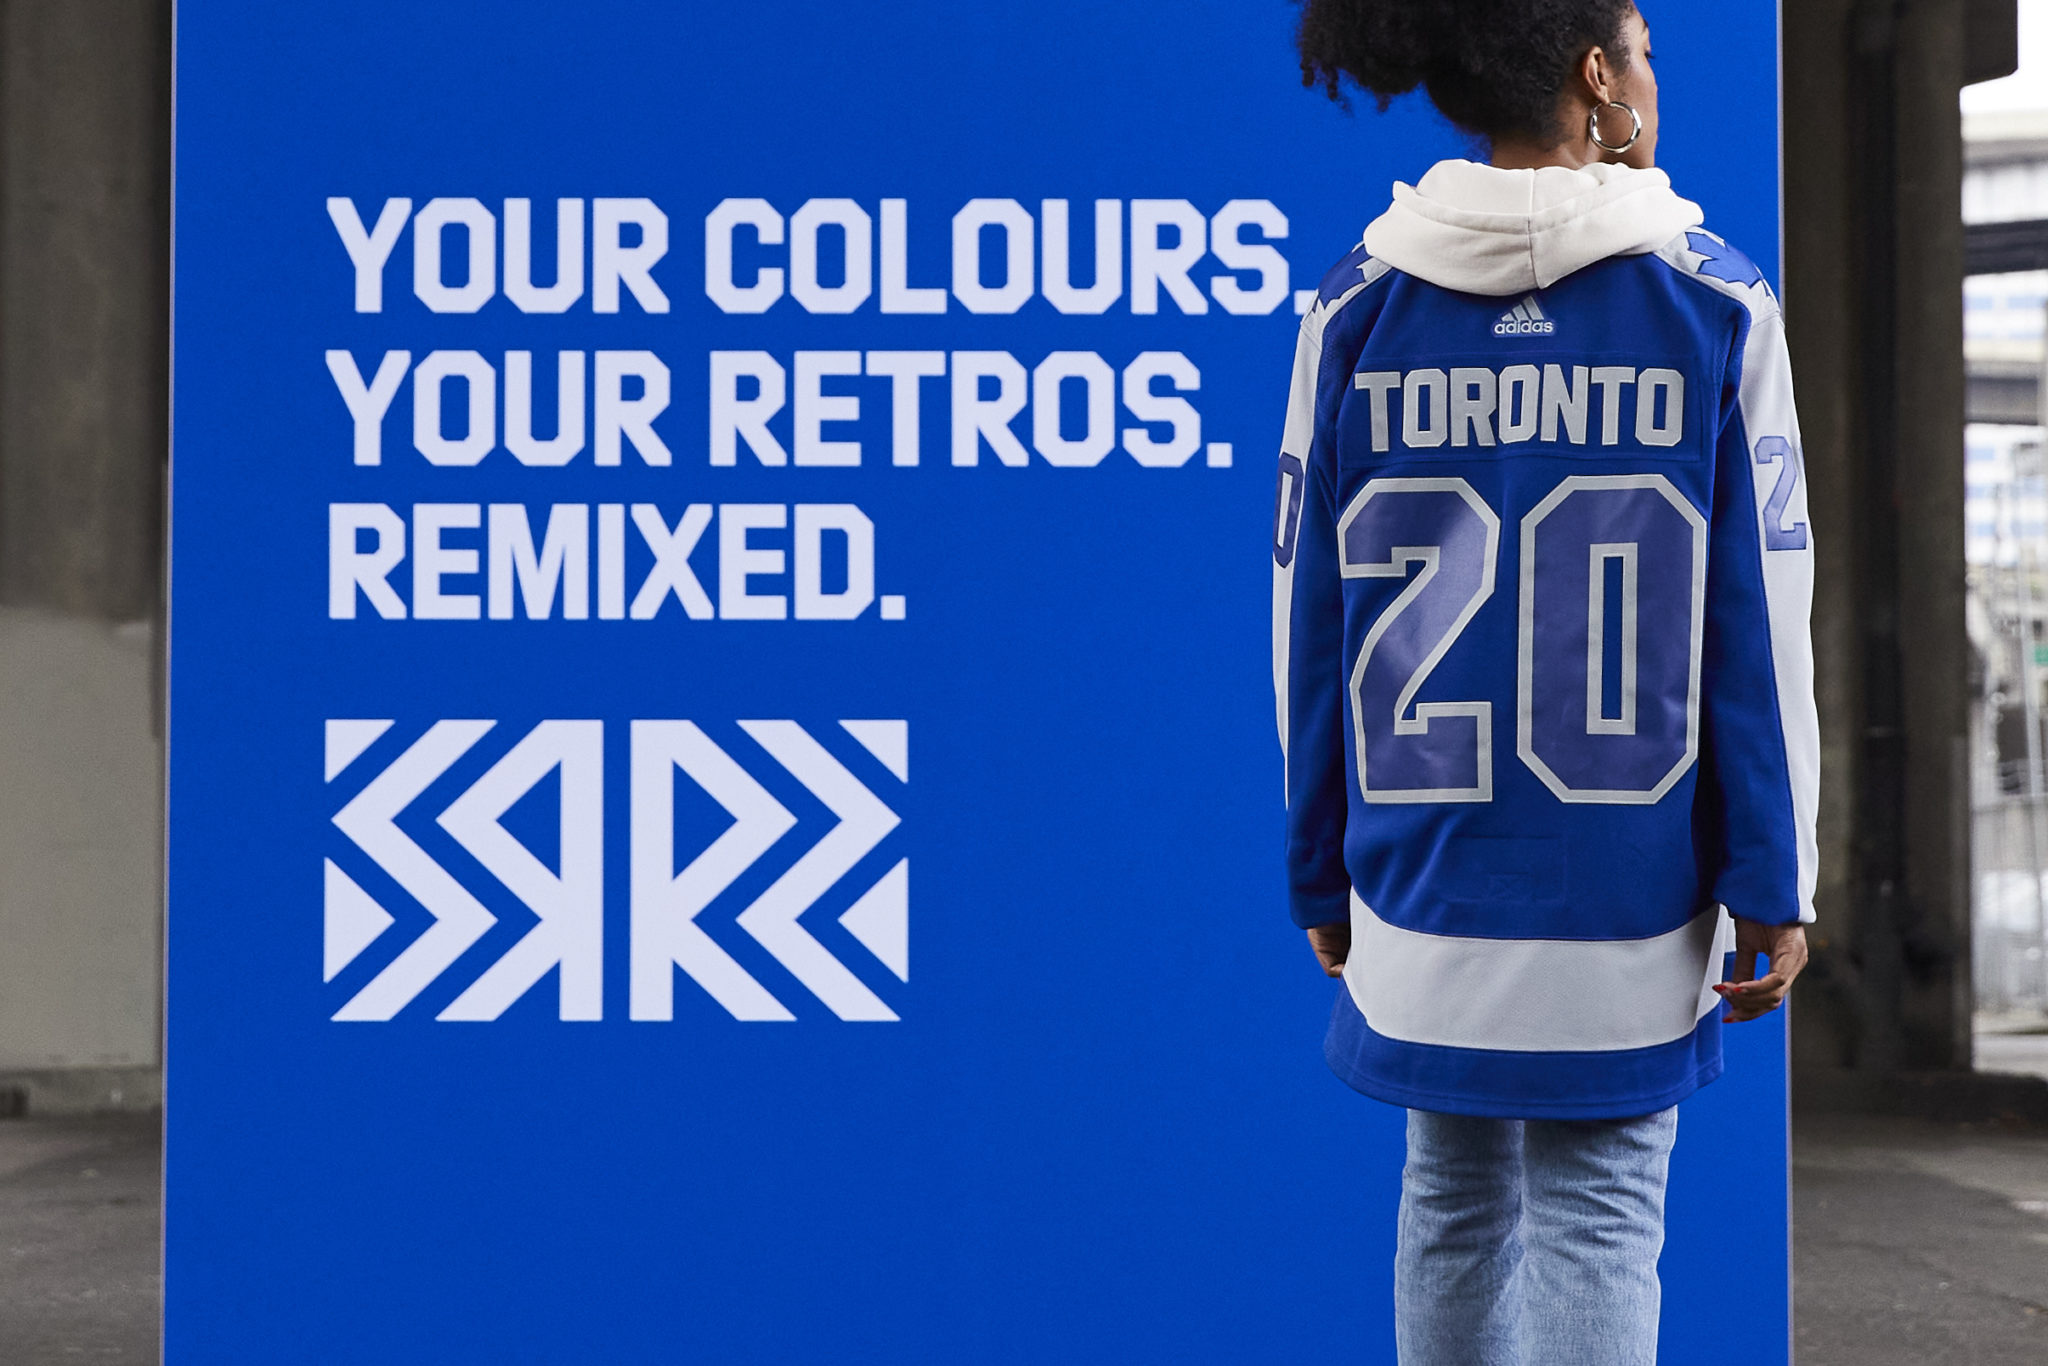 Toronto Maple Leafs Reverse Retro Jersey Mixes a Century of Styles